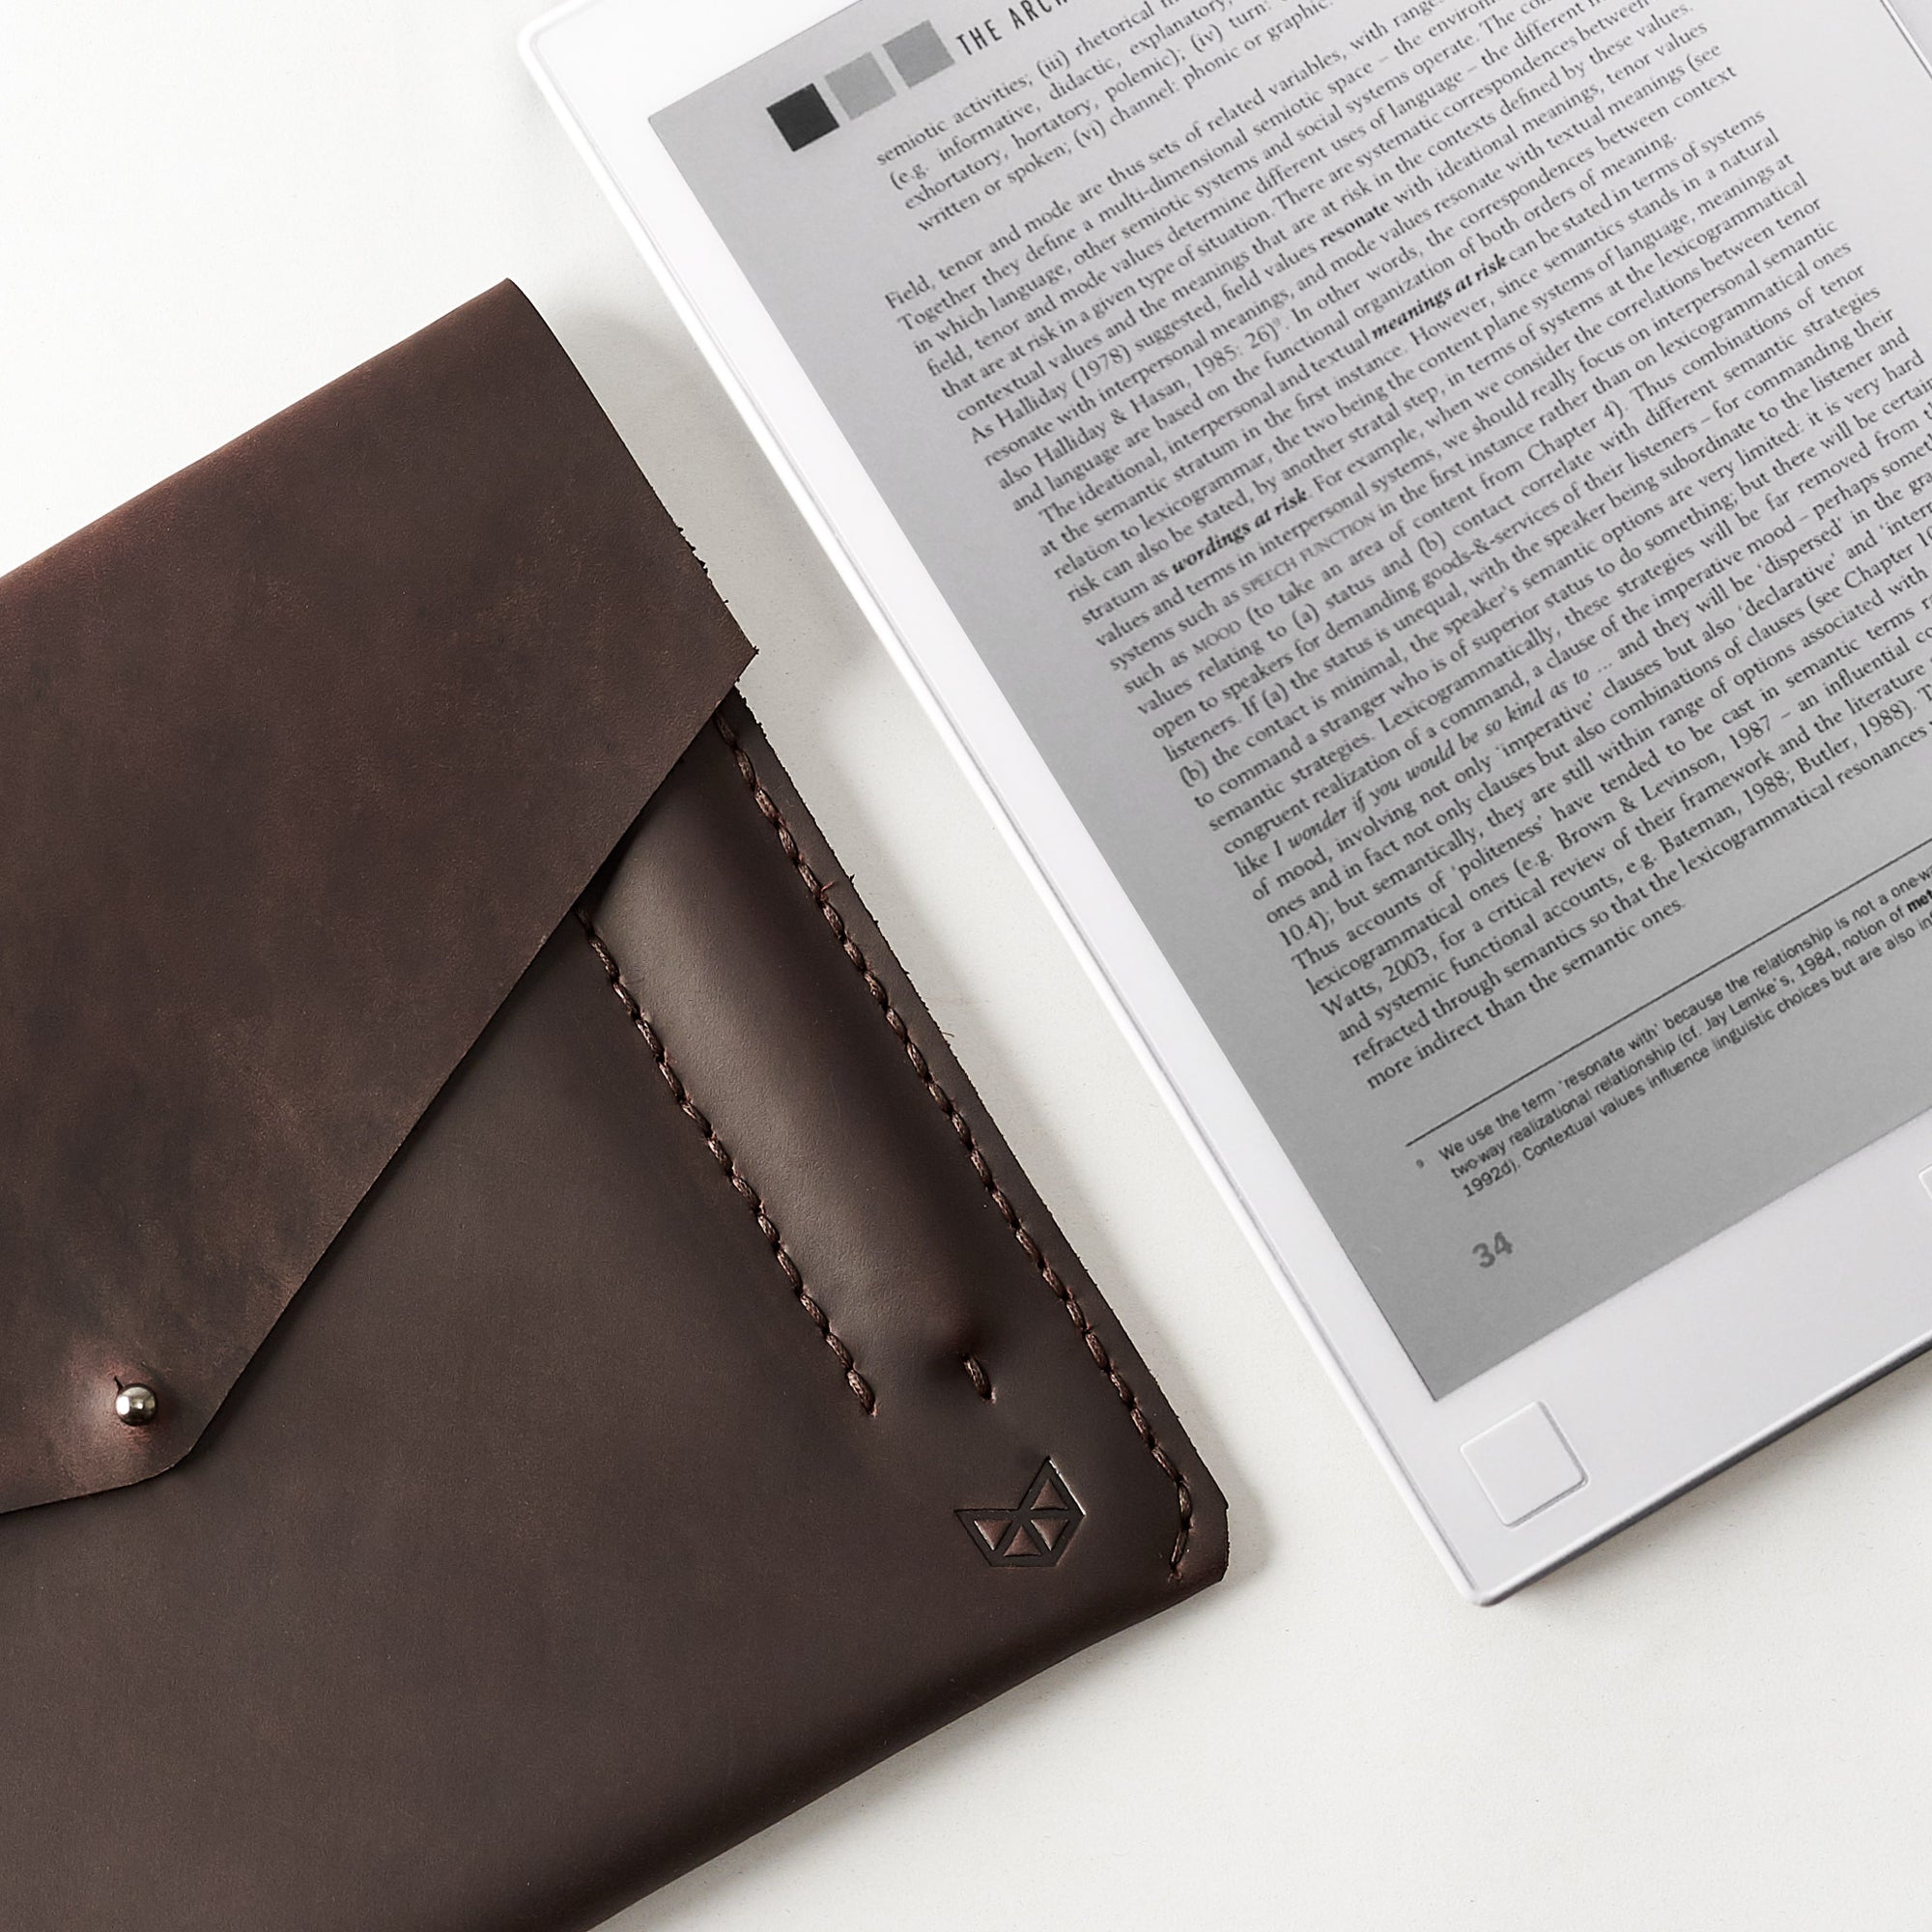 new reMarkable. Dark brown handcrafted leather reMarkable tablet case. Folio with Marker holder. Paper E-ink tablet minimalist sleeve design. 